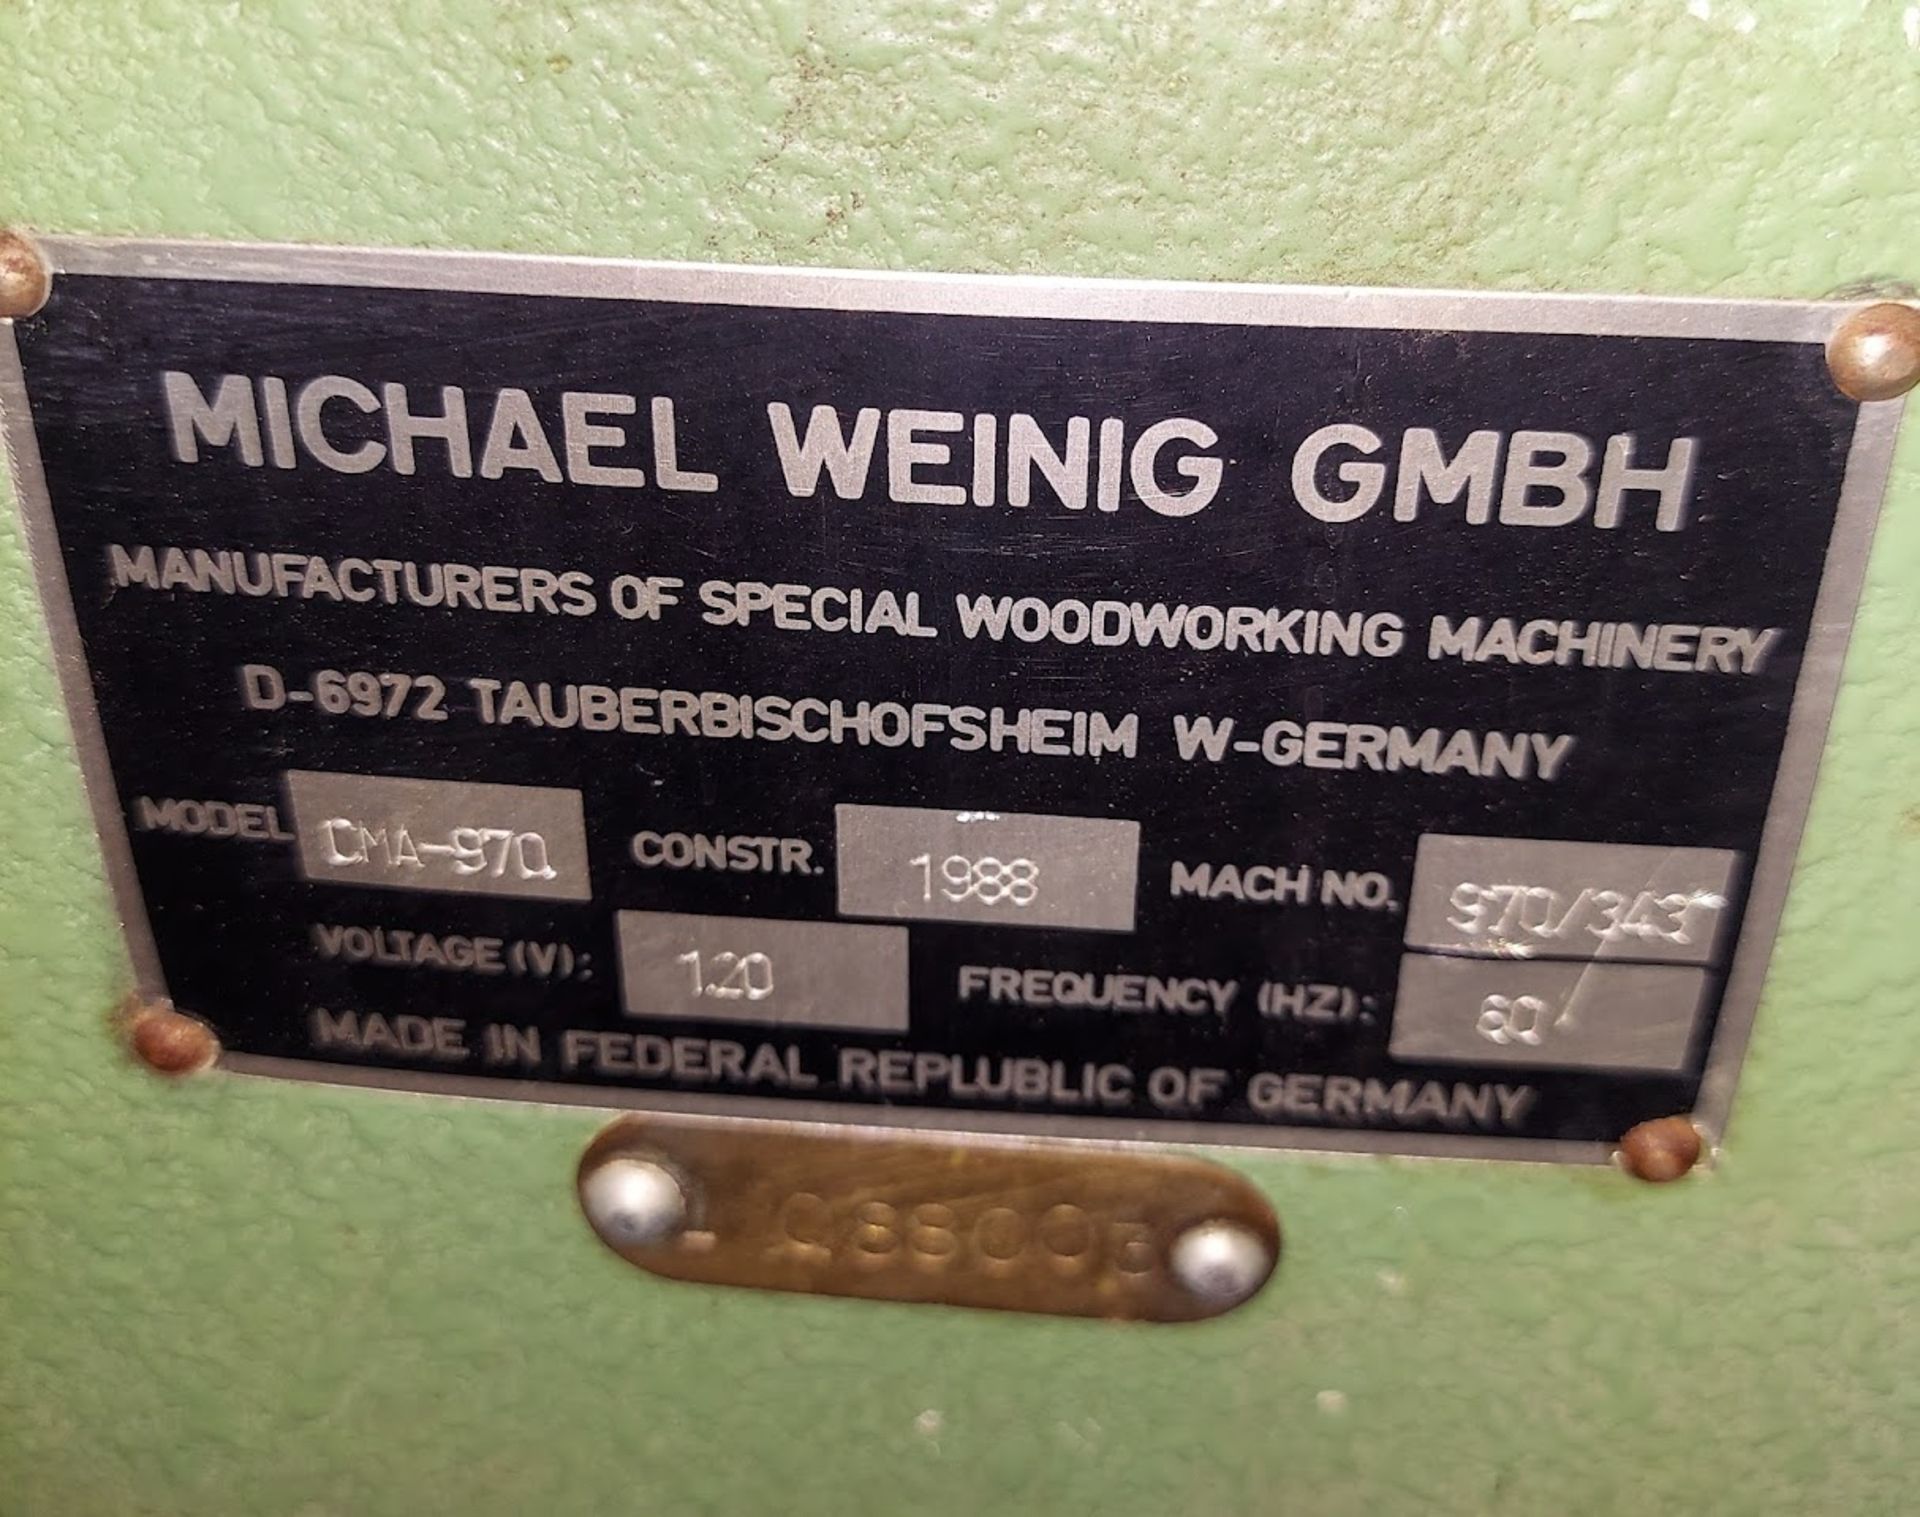 Michael Weinig GMBH CMA-970-System Tool Measuring Stand, 120 Volt 1ph - Image 2 of 4